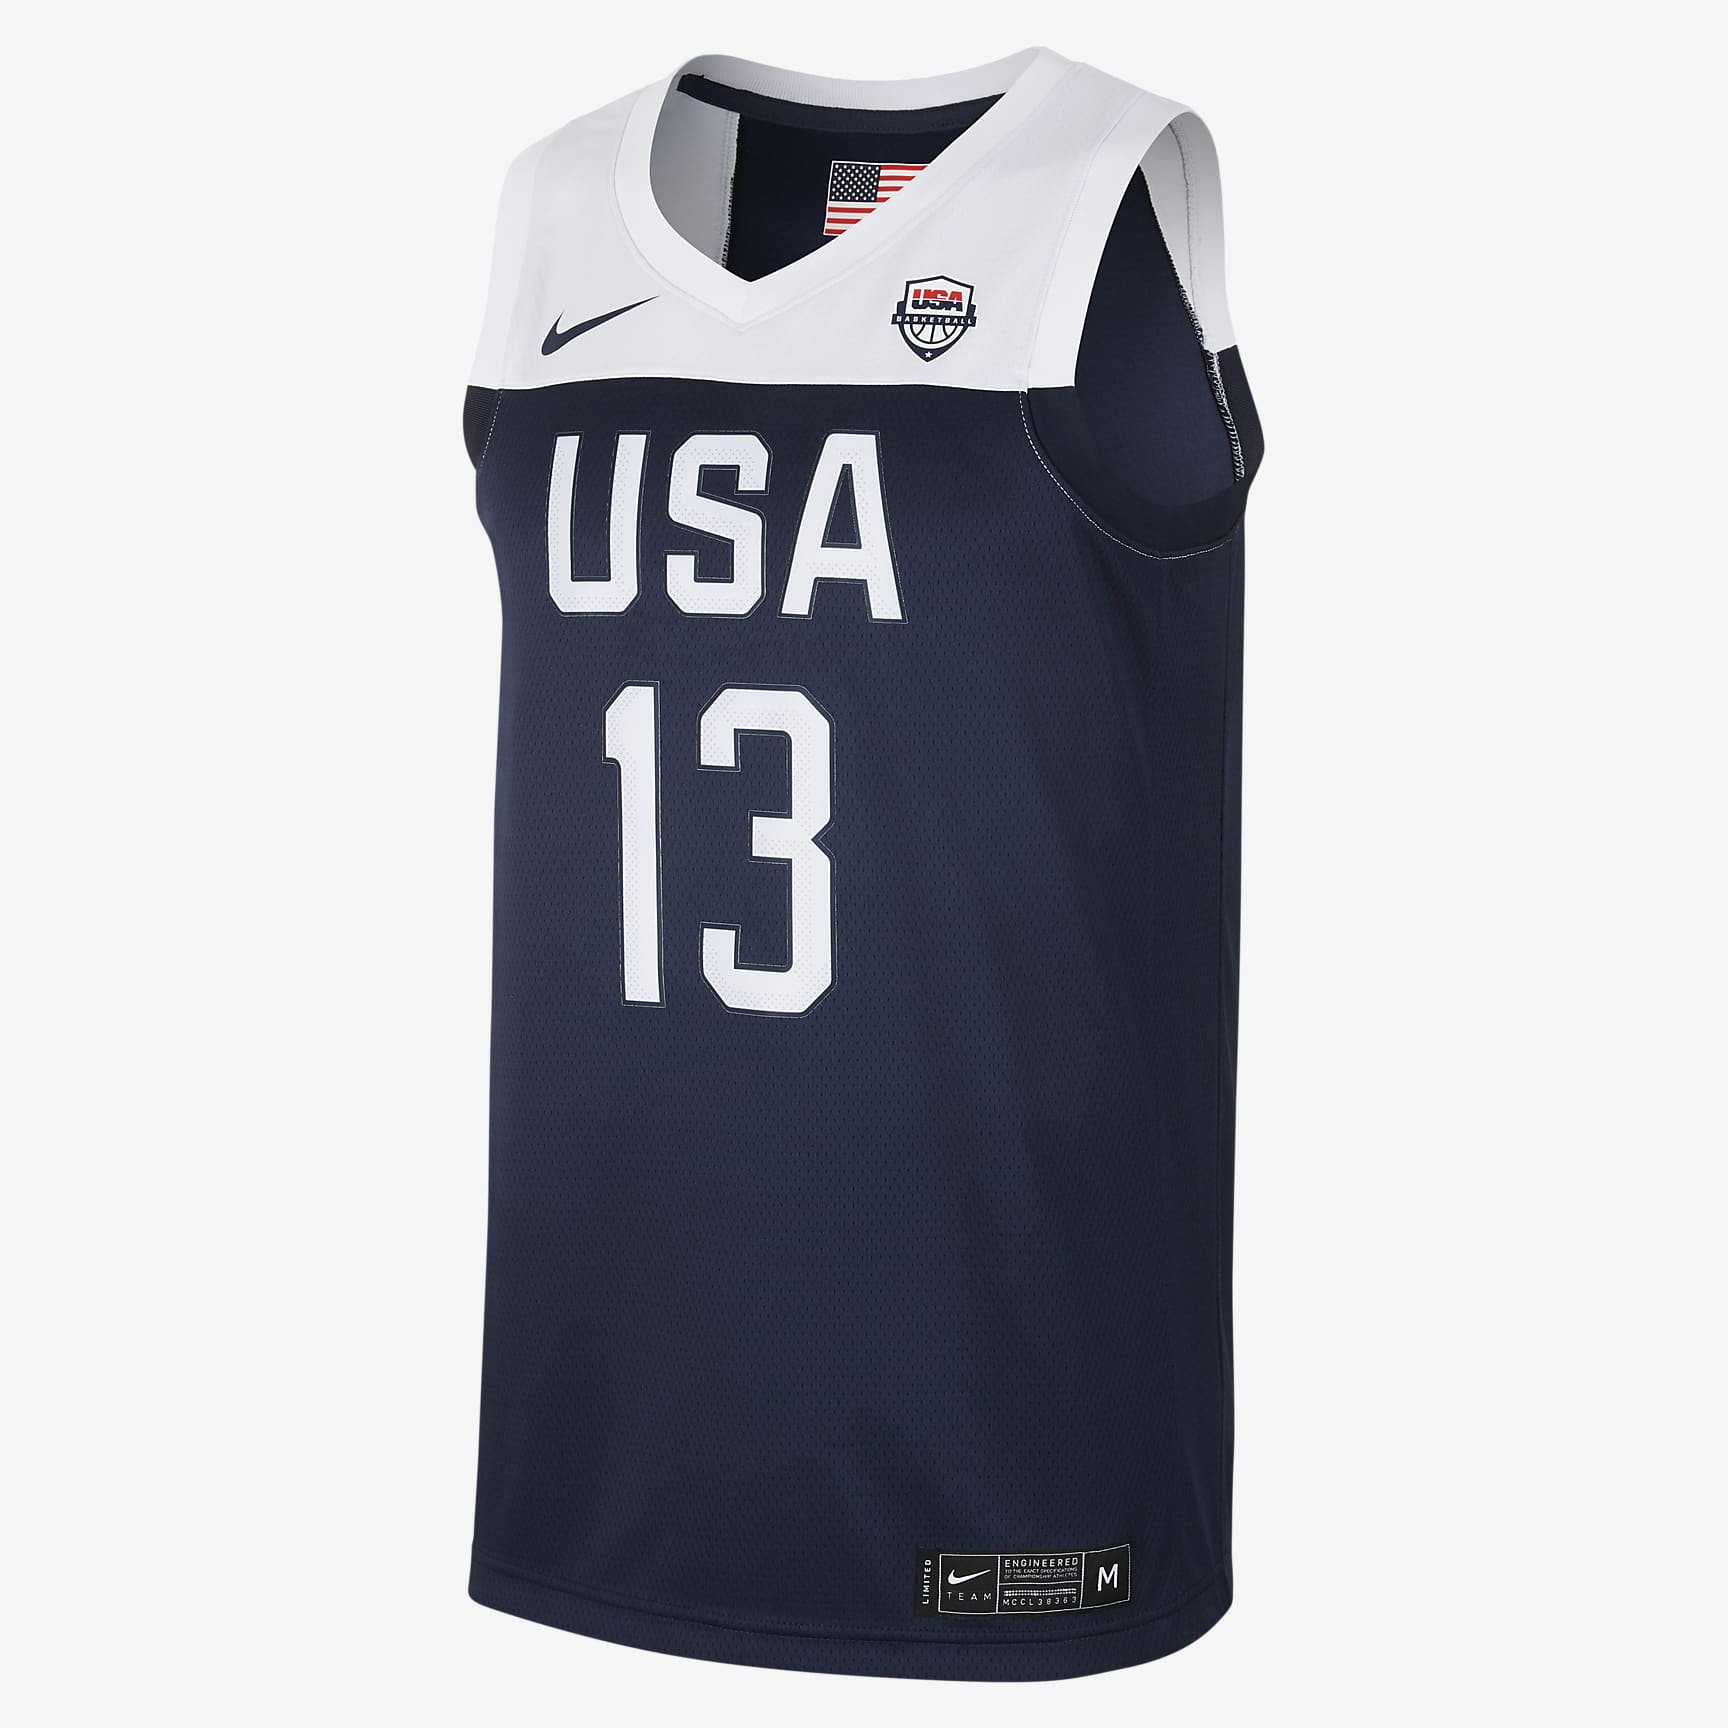 USA Nike (Road) Men's Basketball Jersey. Nike BG